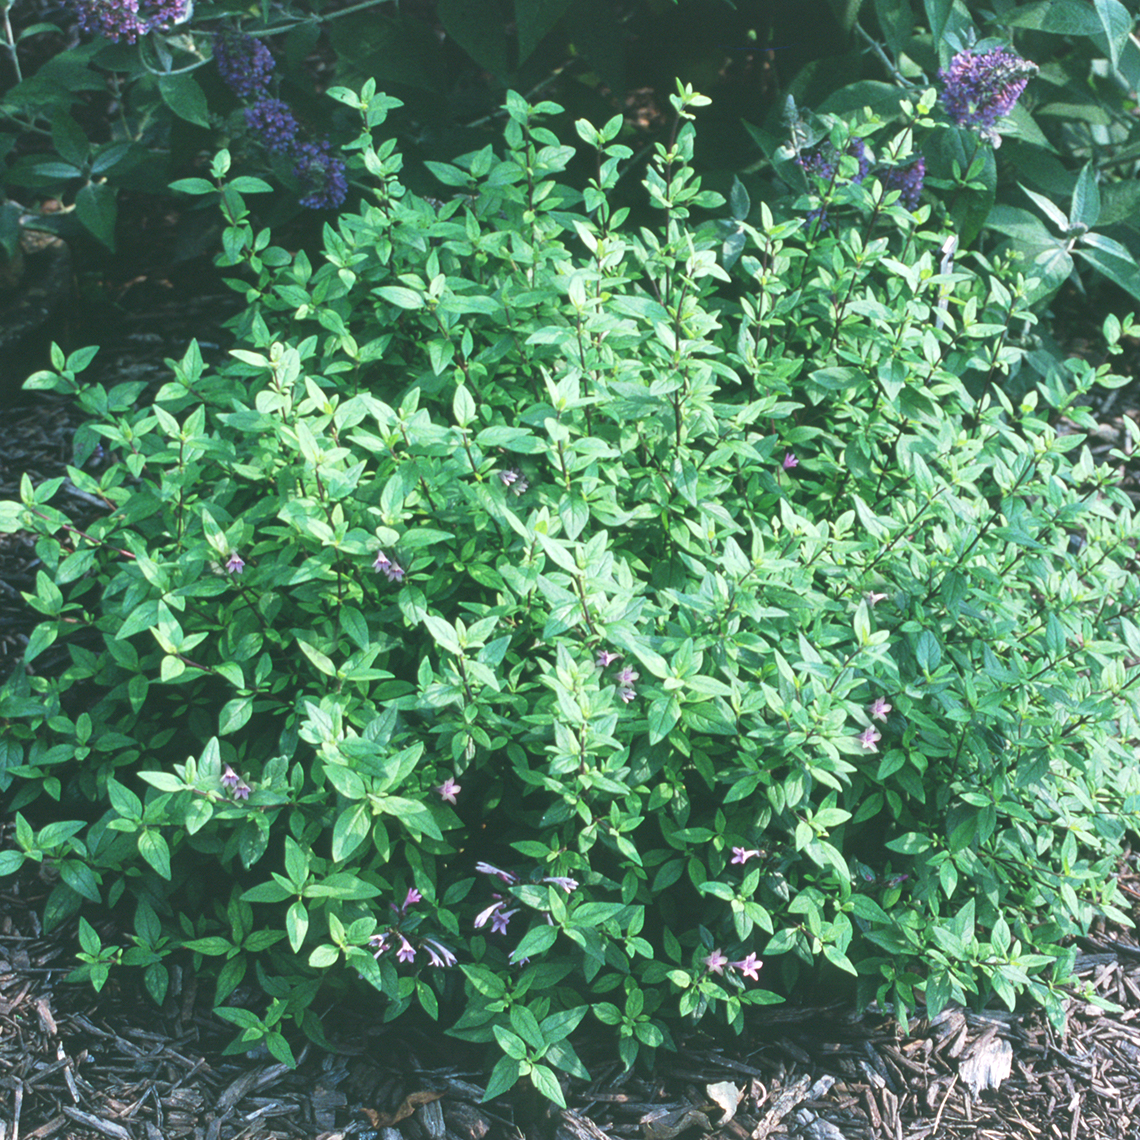 Leptodermis green foliage in the landscape